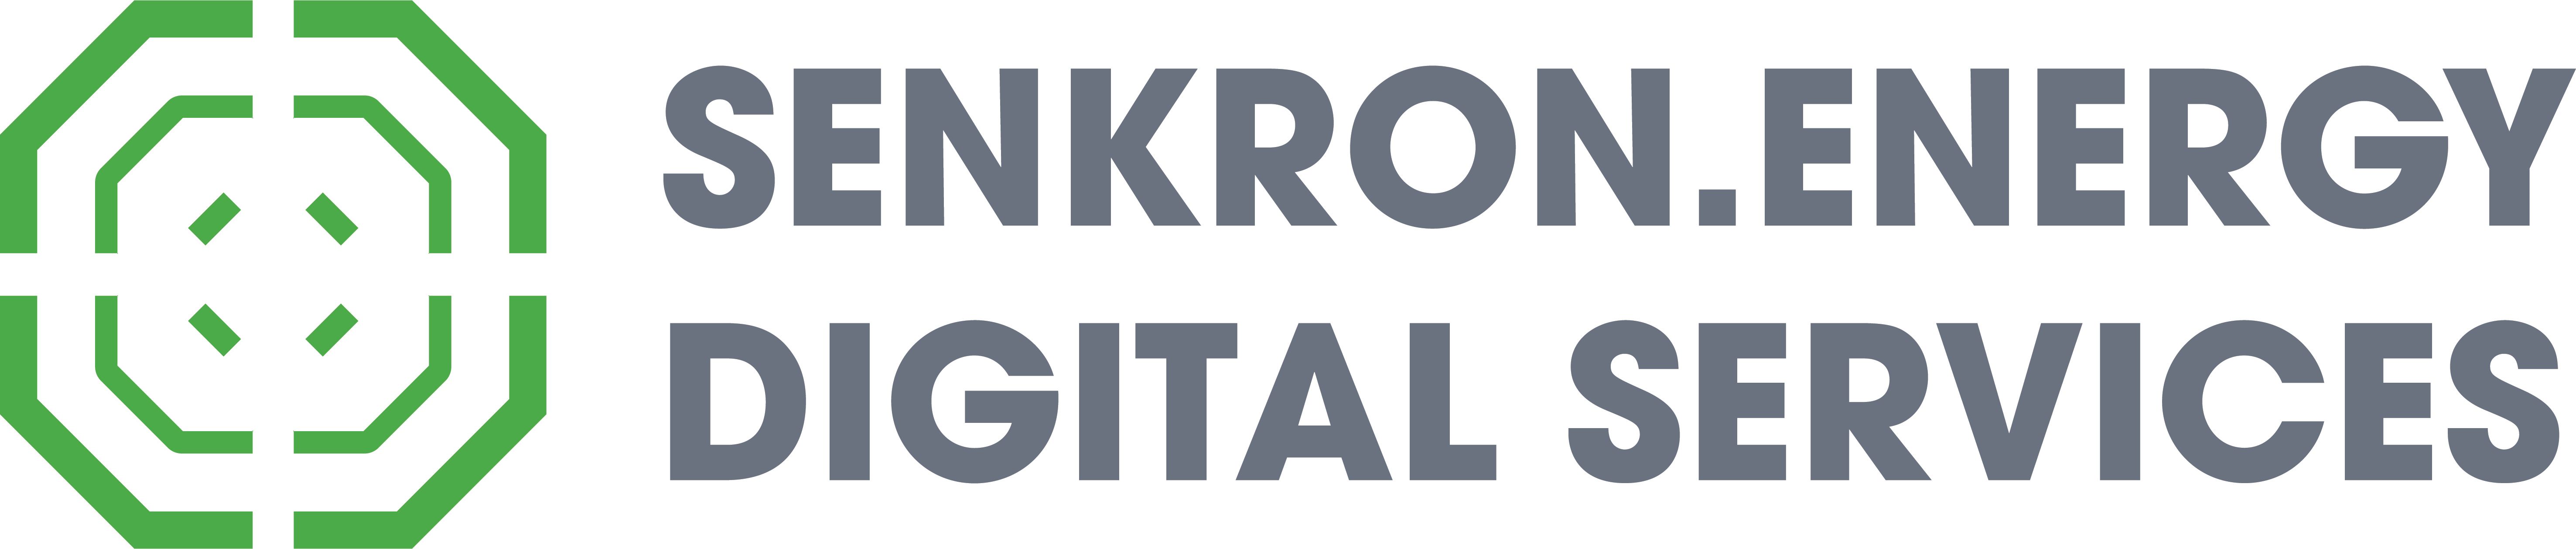 Senkron Energy Digital Services